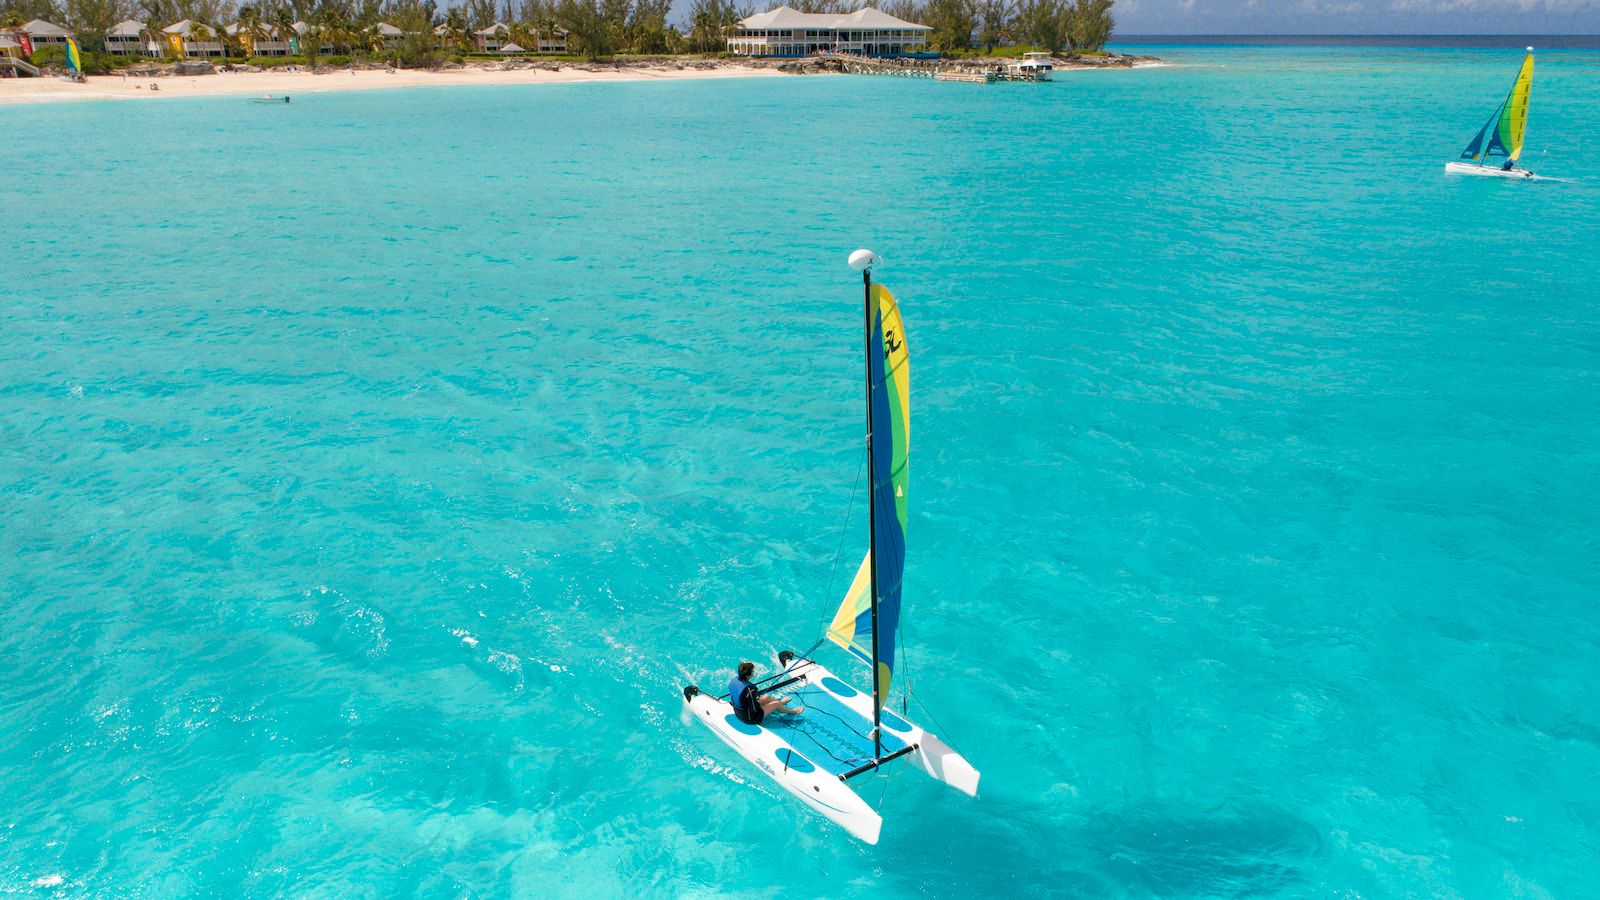 Catamaran on ocean in Bahamas